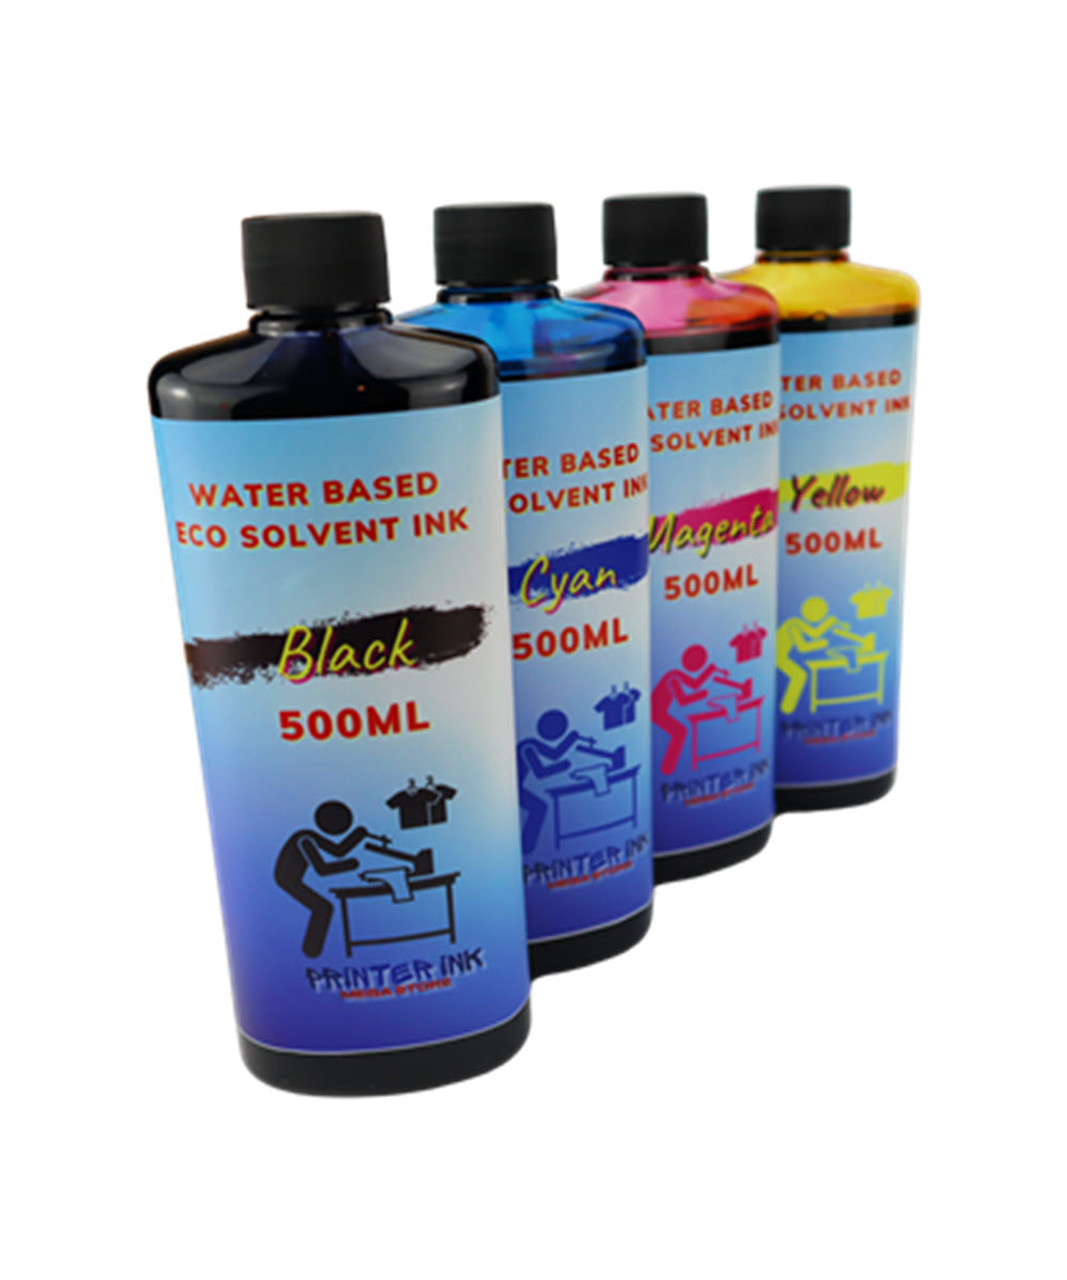 Dye Based Eco Solvent Ink 4- 500ml bottles for Epson WorkForce Pro WF-7310 WF-7820 WF-7840 printers